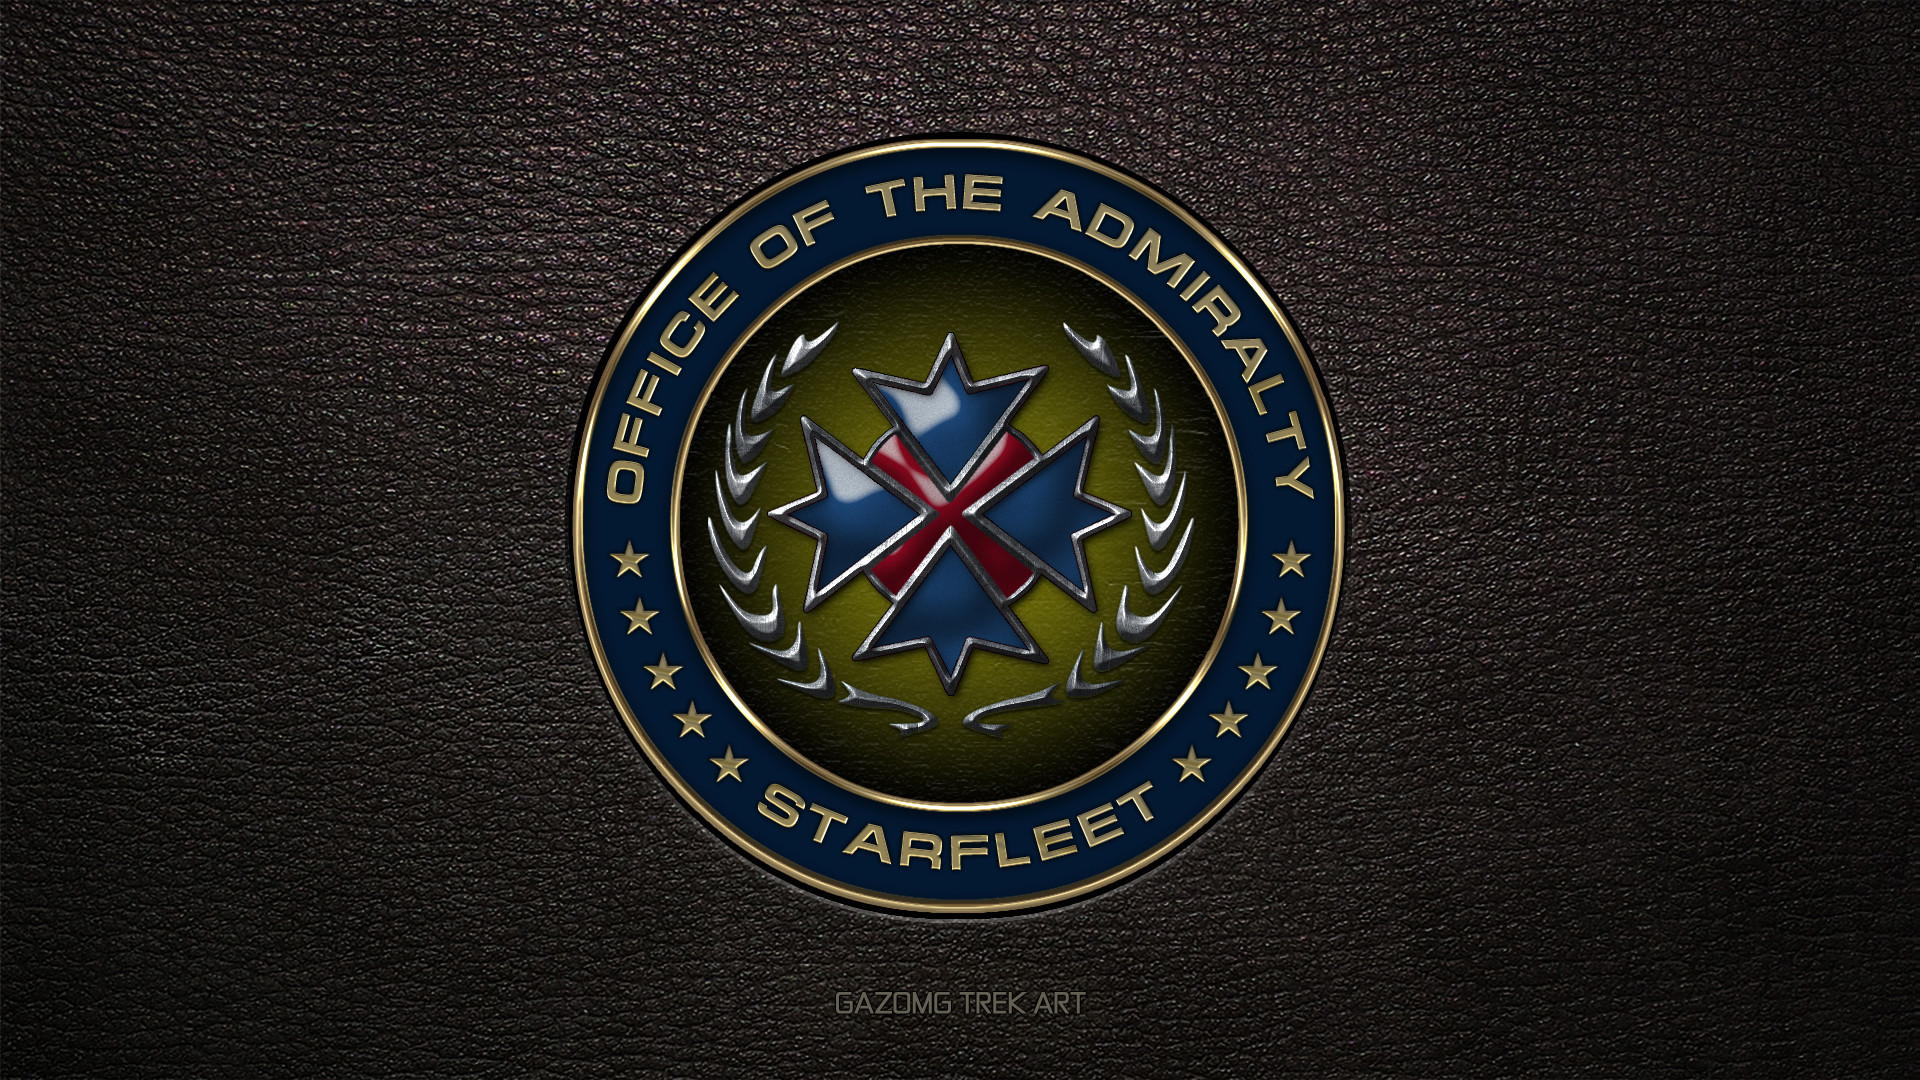 1920x1080 ... Star Trek Office of the Admiralty Starfleet by gazomg